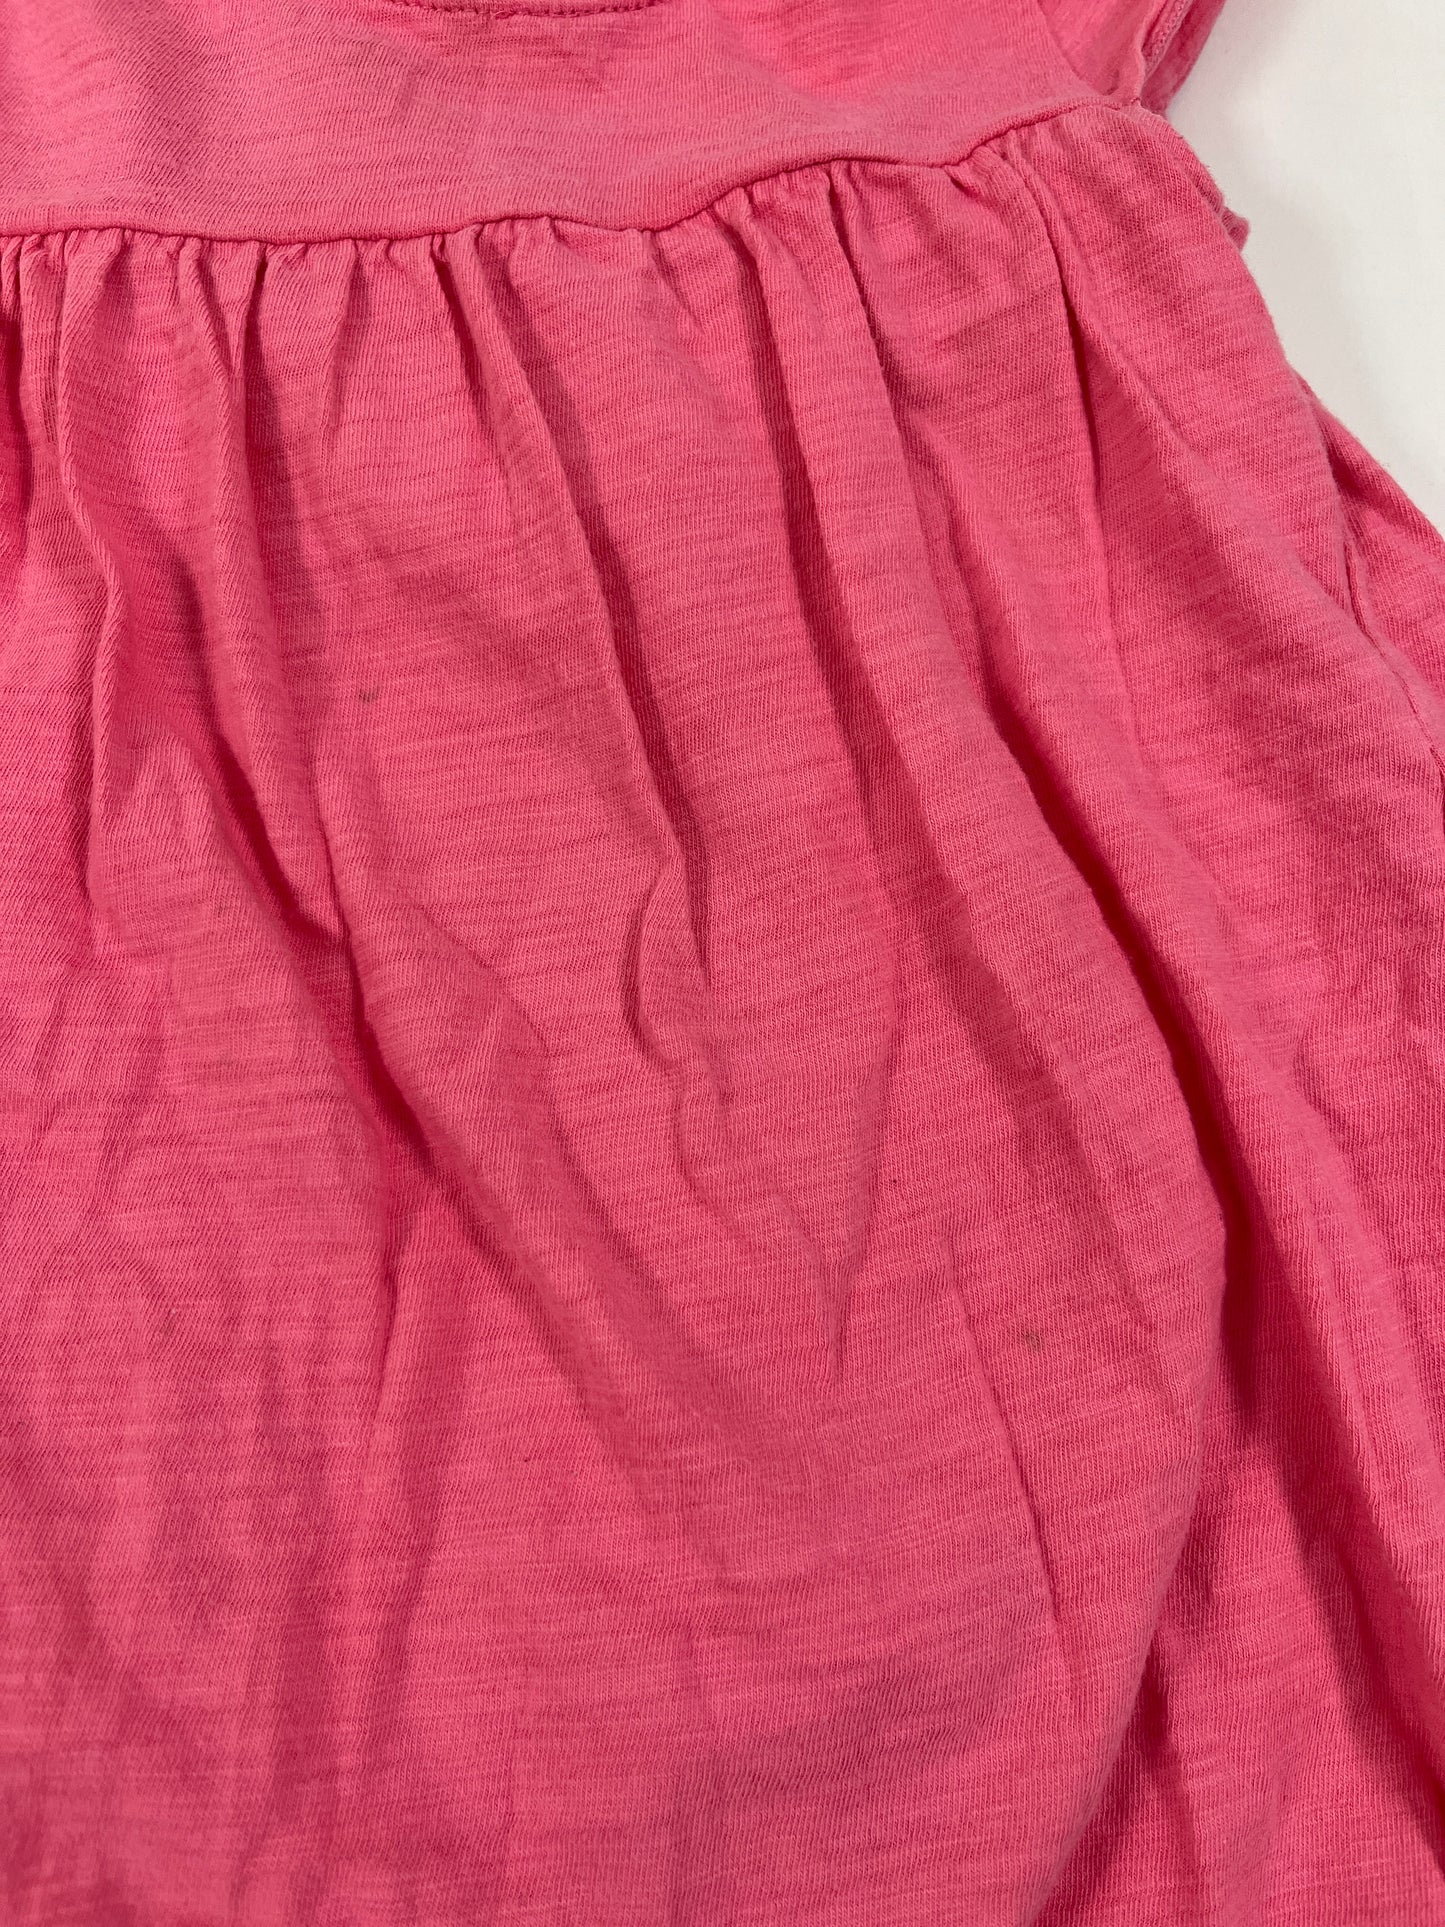 PPU 45242 24m girls pink dress w/ built in onesie + floral romper bundle (2)